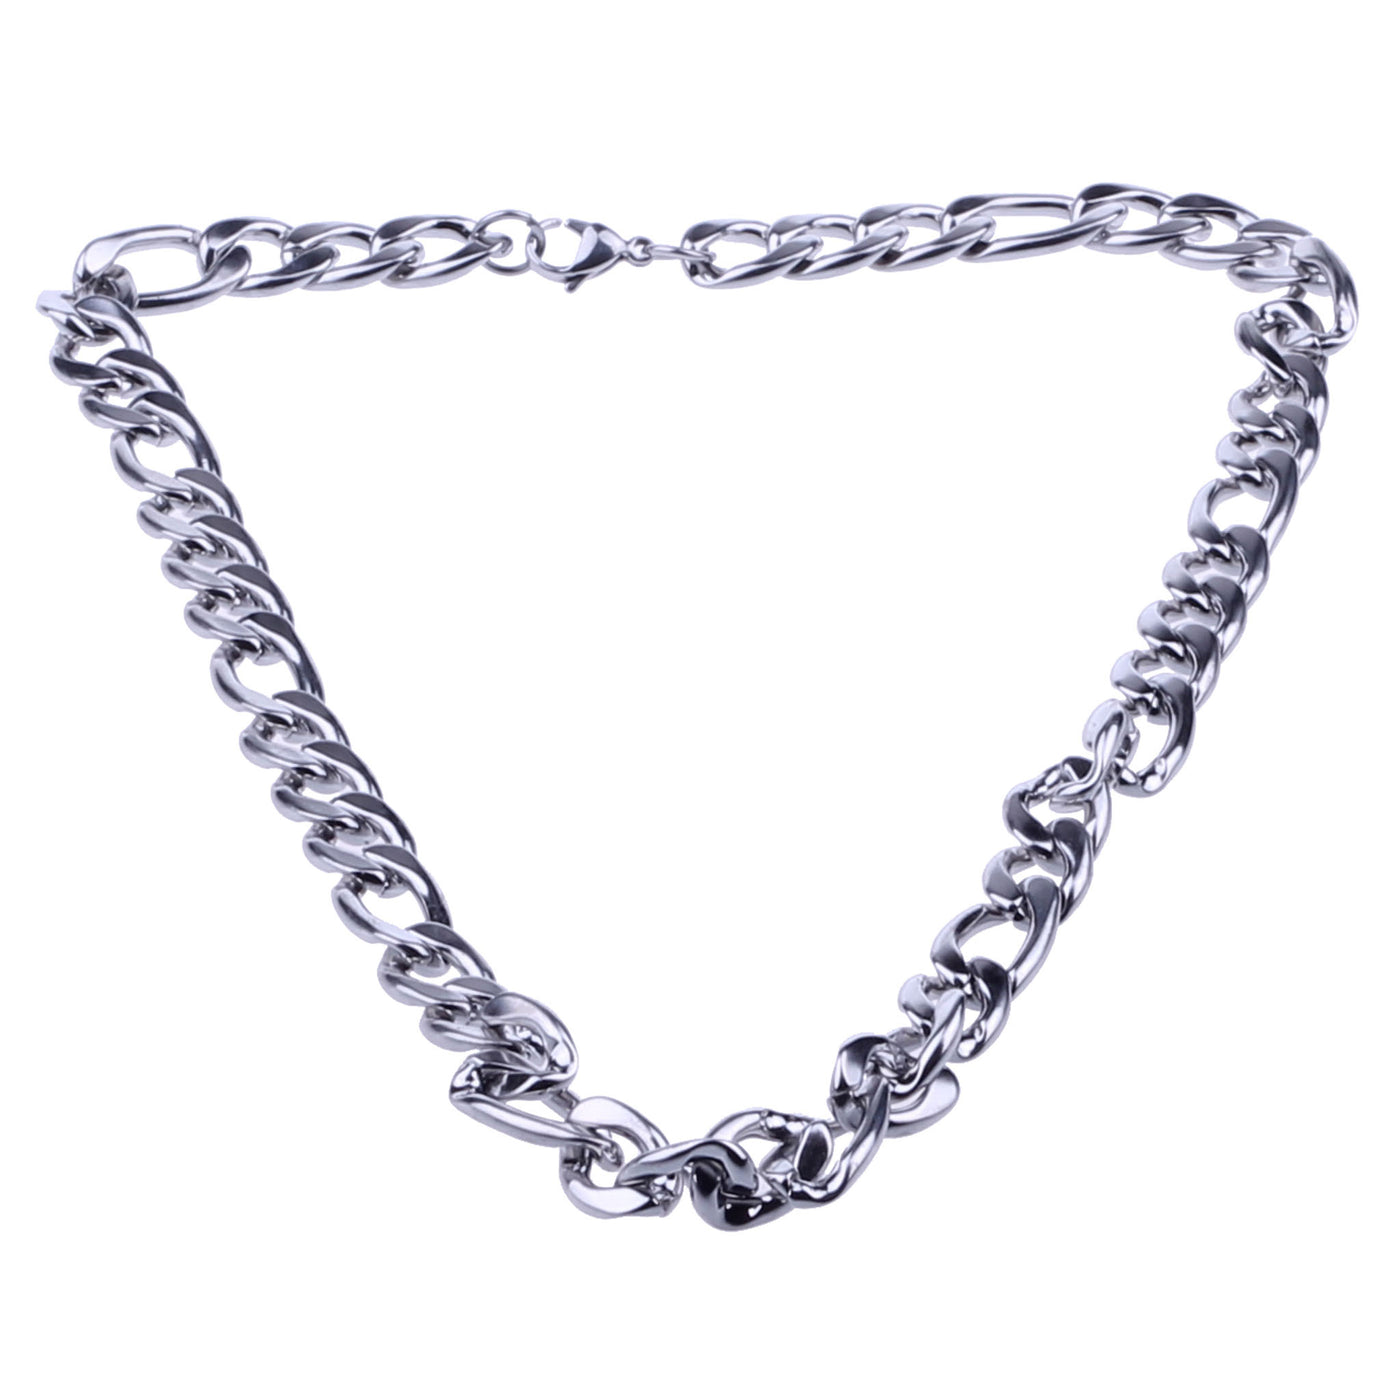 Steel chain 52cm